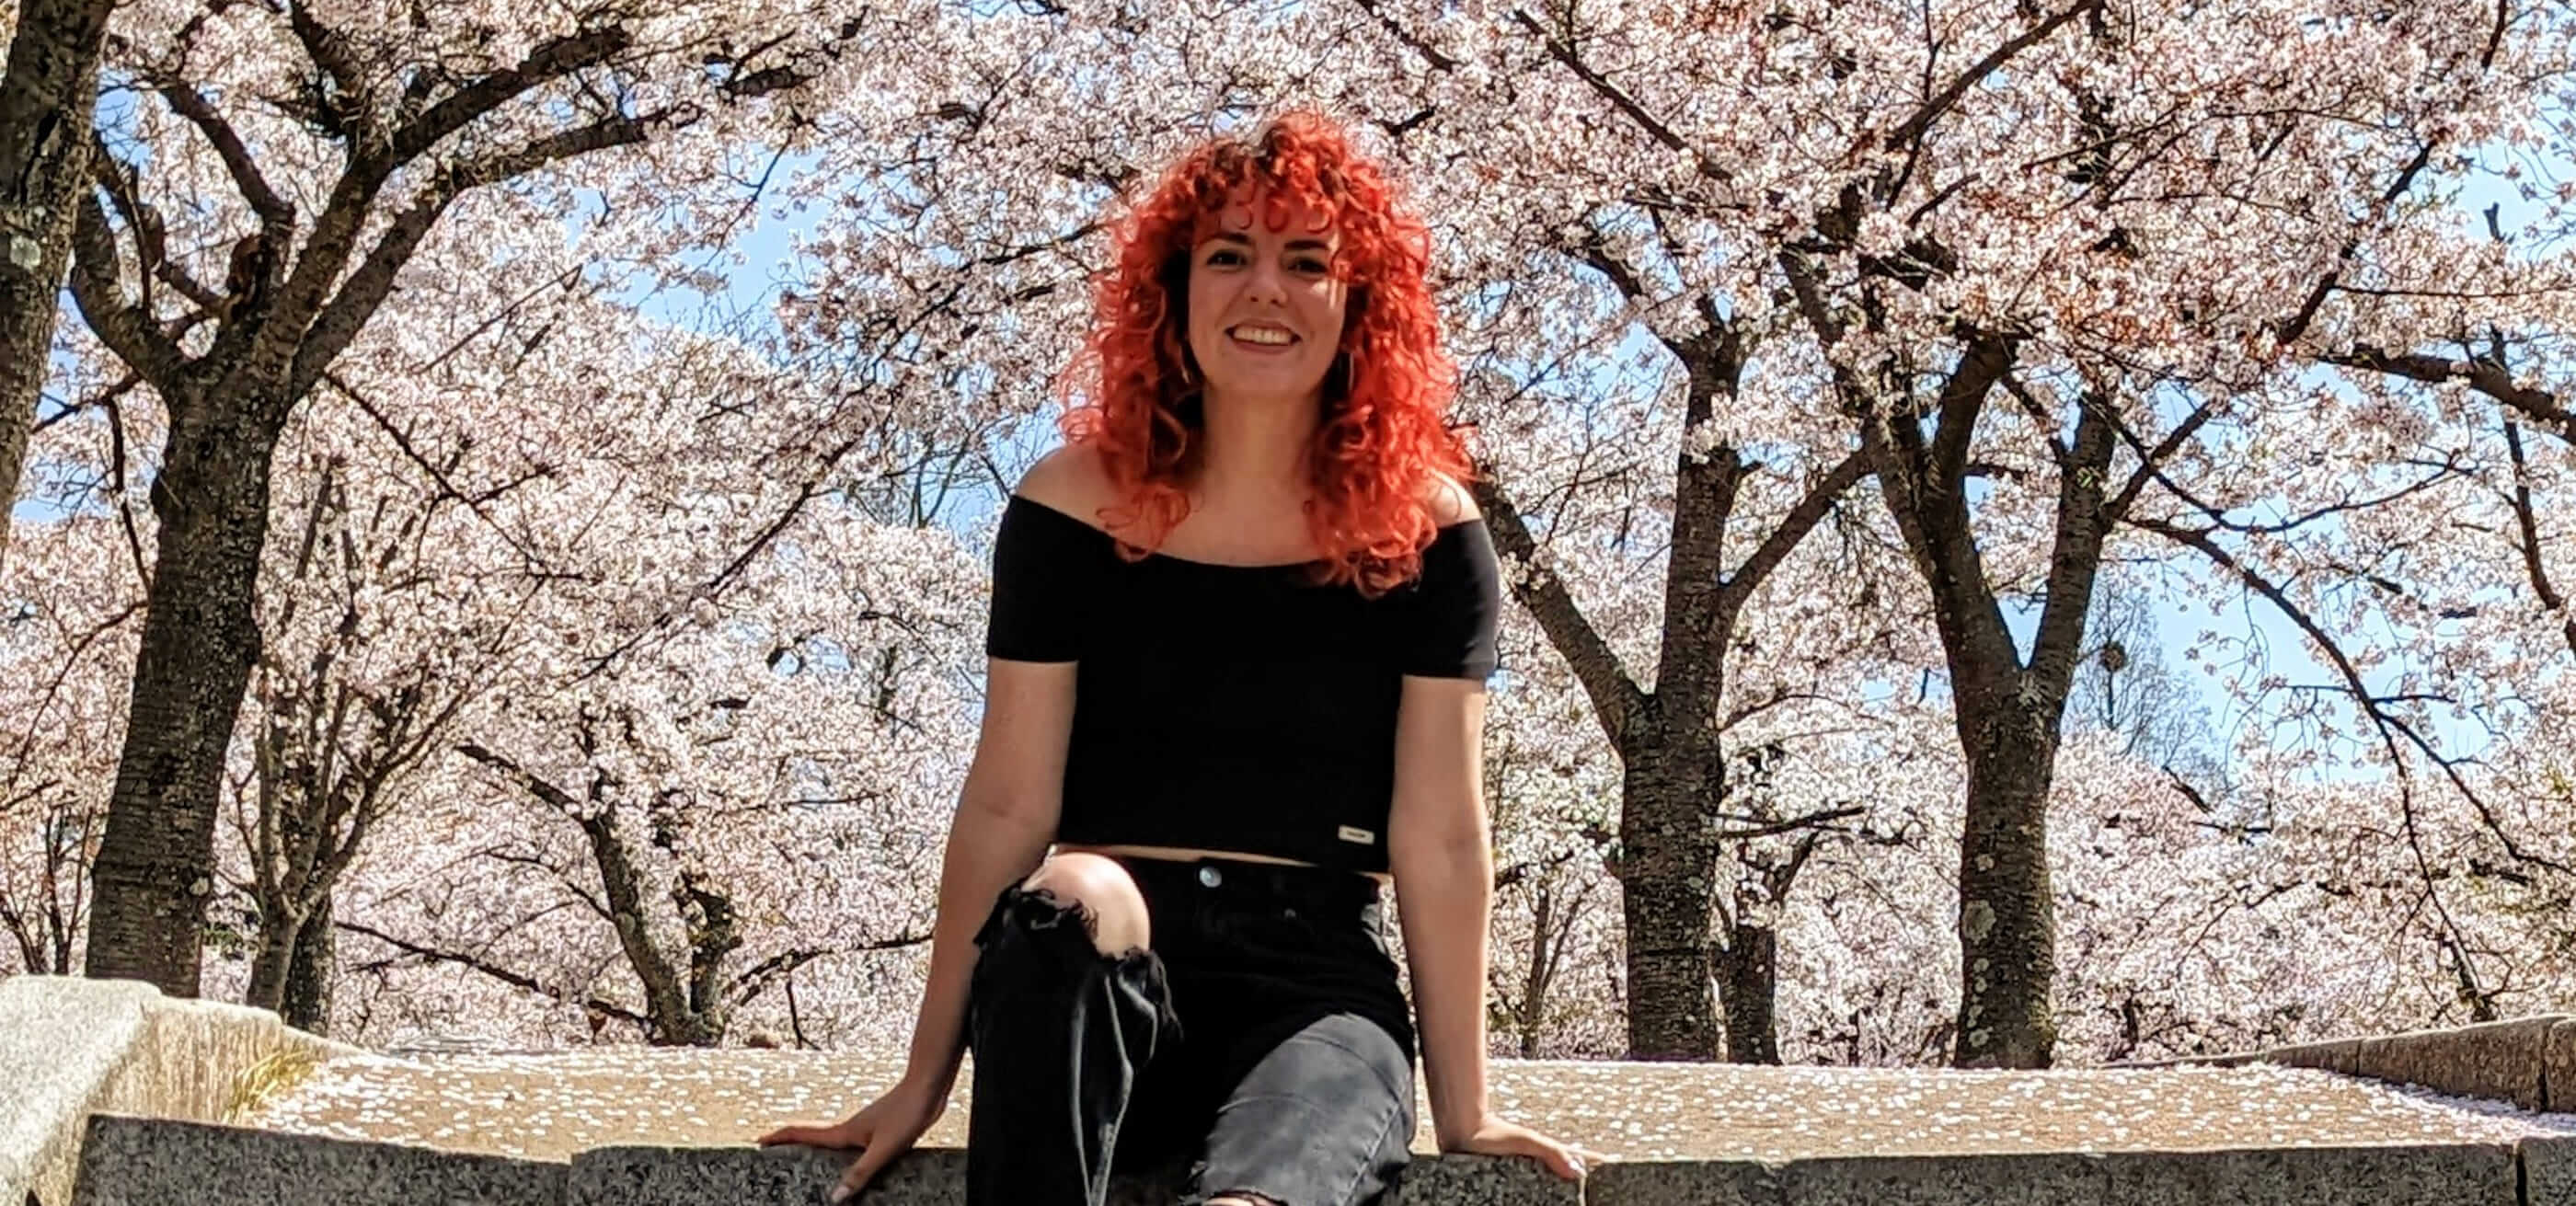 DigiPen graduate Marina Bordona standing in a beautiful cherry blossom garden.